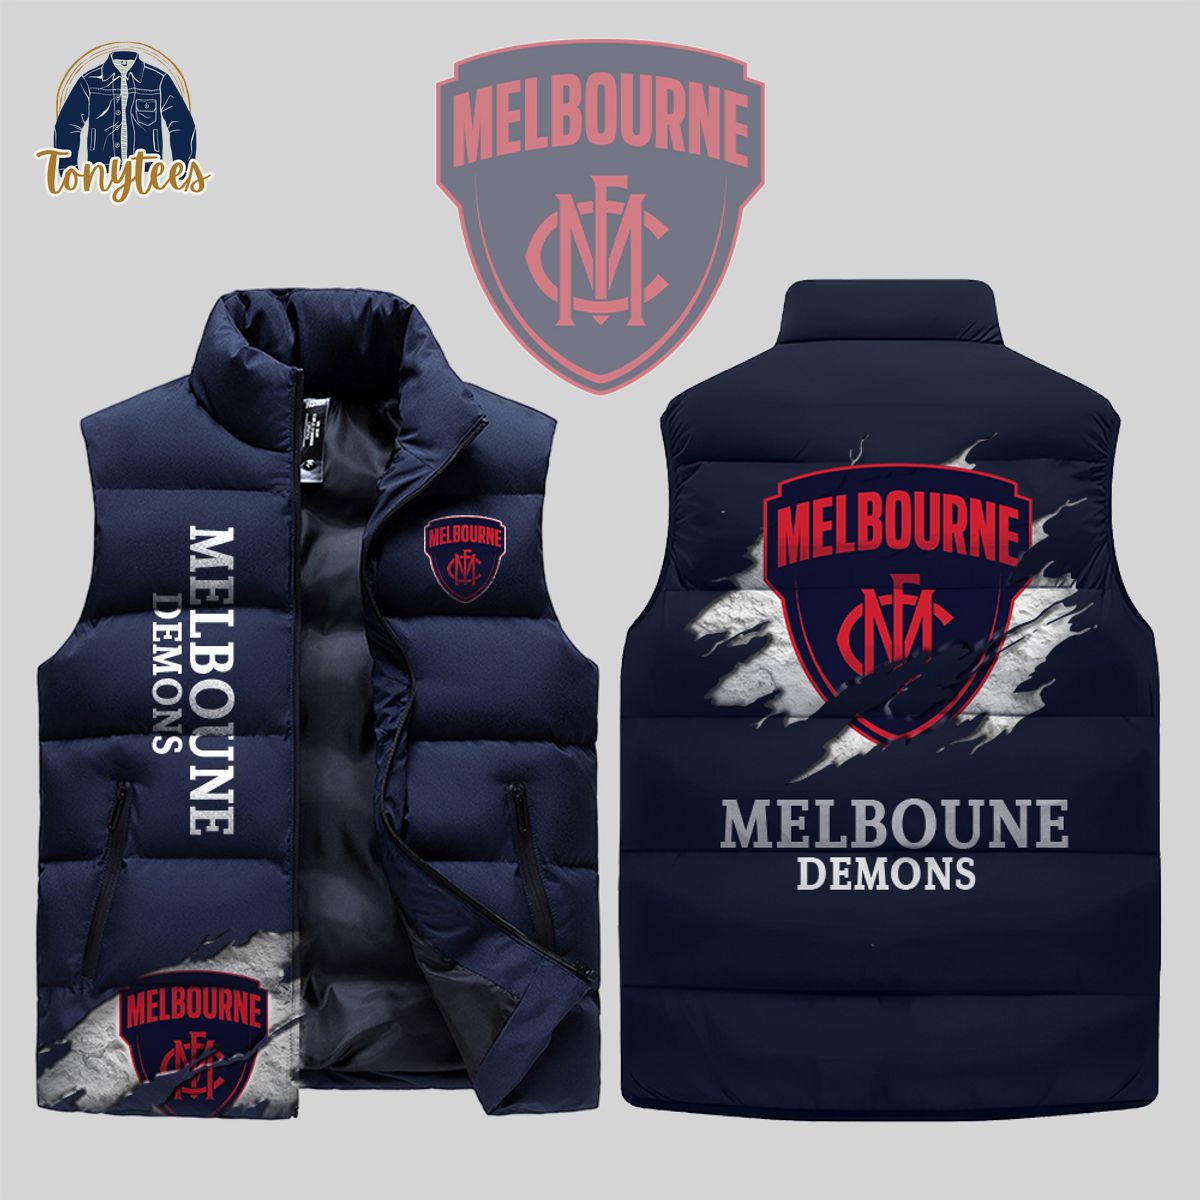 Melbourne Football Club Demons AFL Sleeveless Jacket